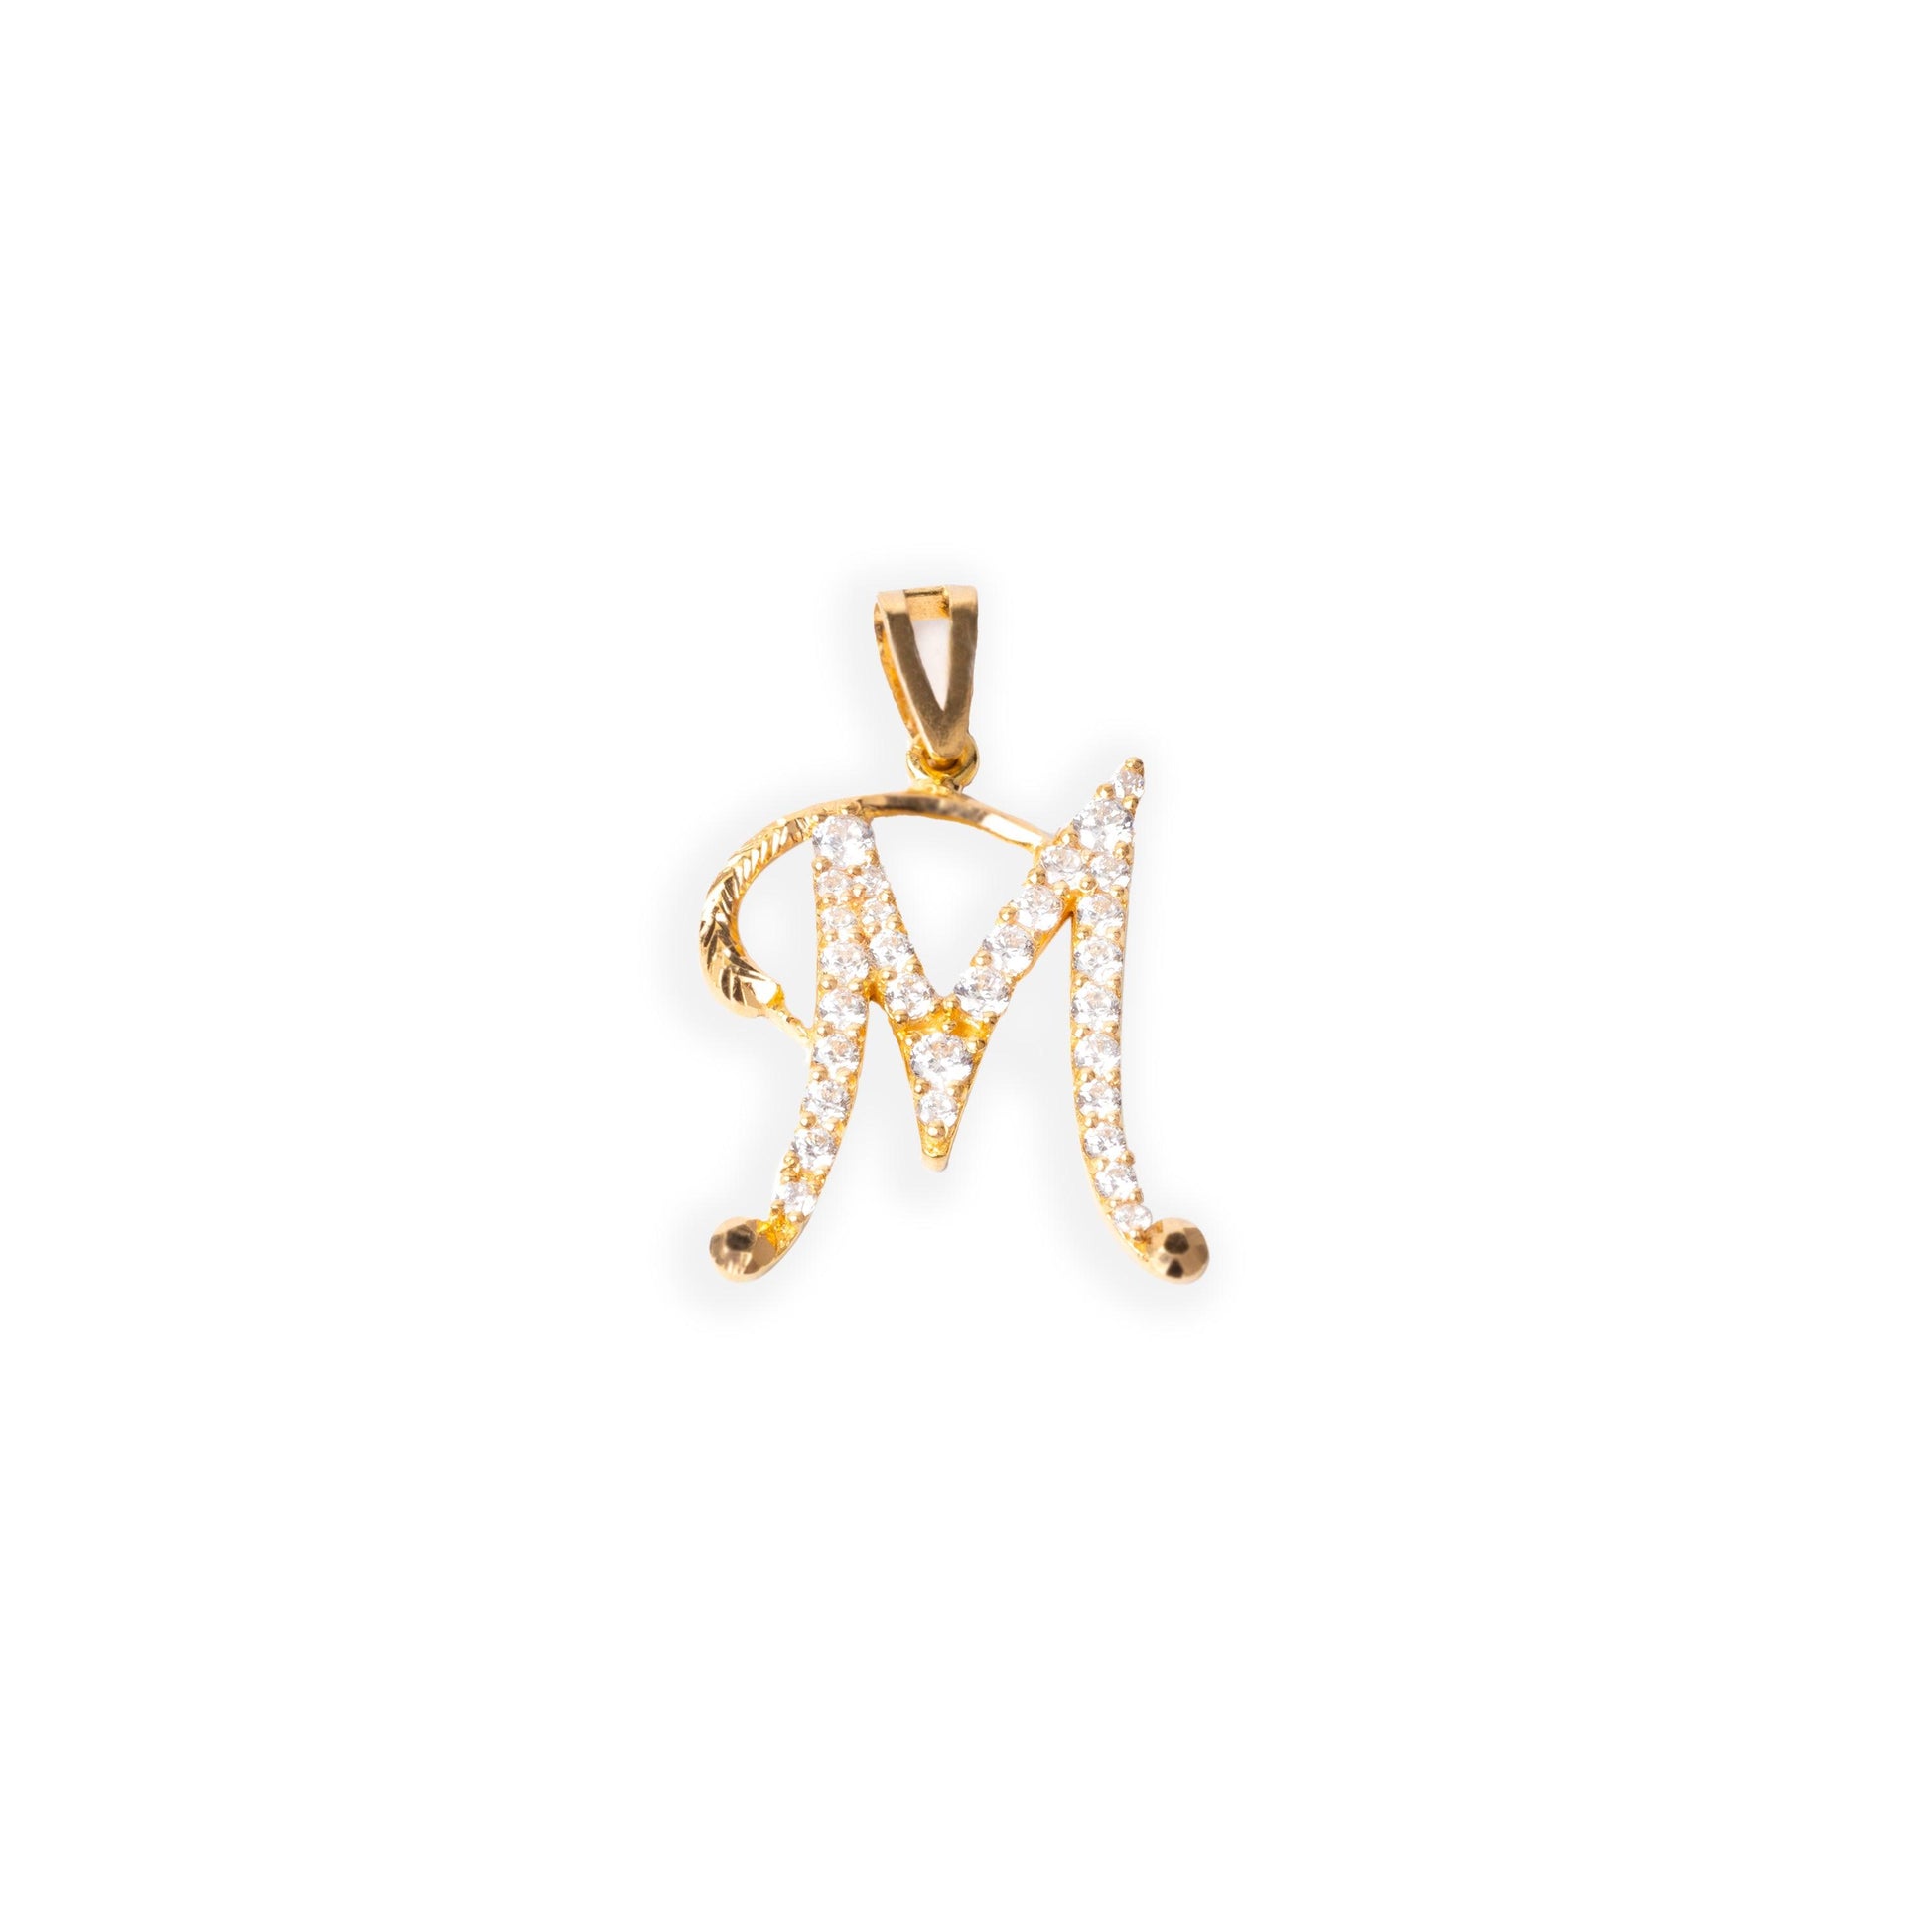 'M' 22ct Gold Initial Pendant with Cubic Zirconia Stones P-7039-M - Minar Jewellers